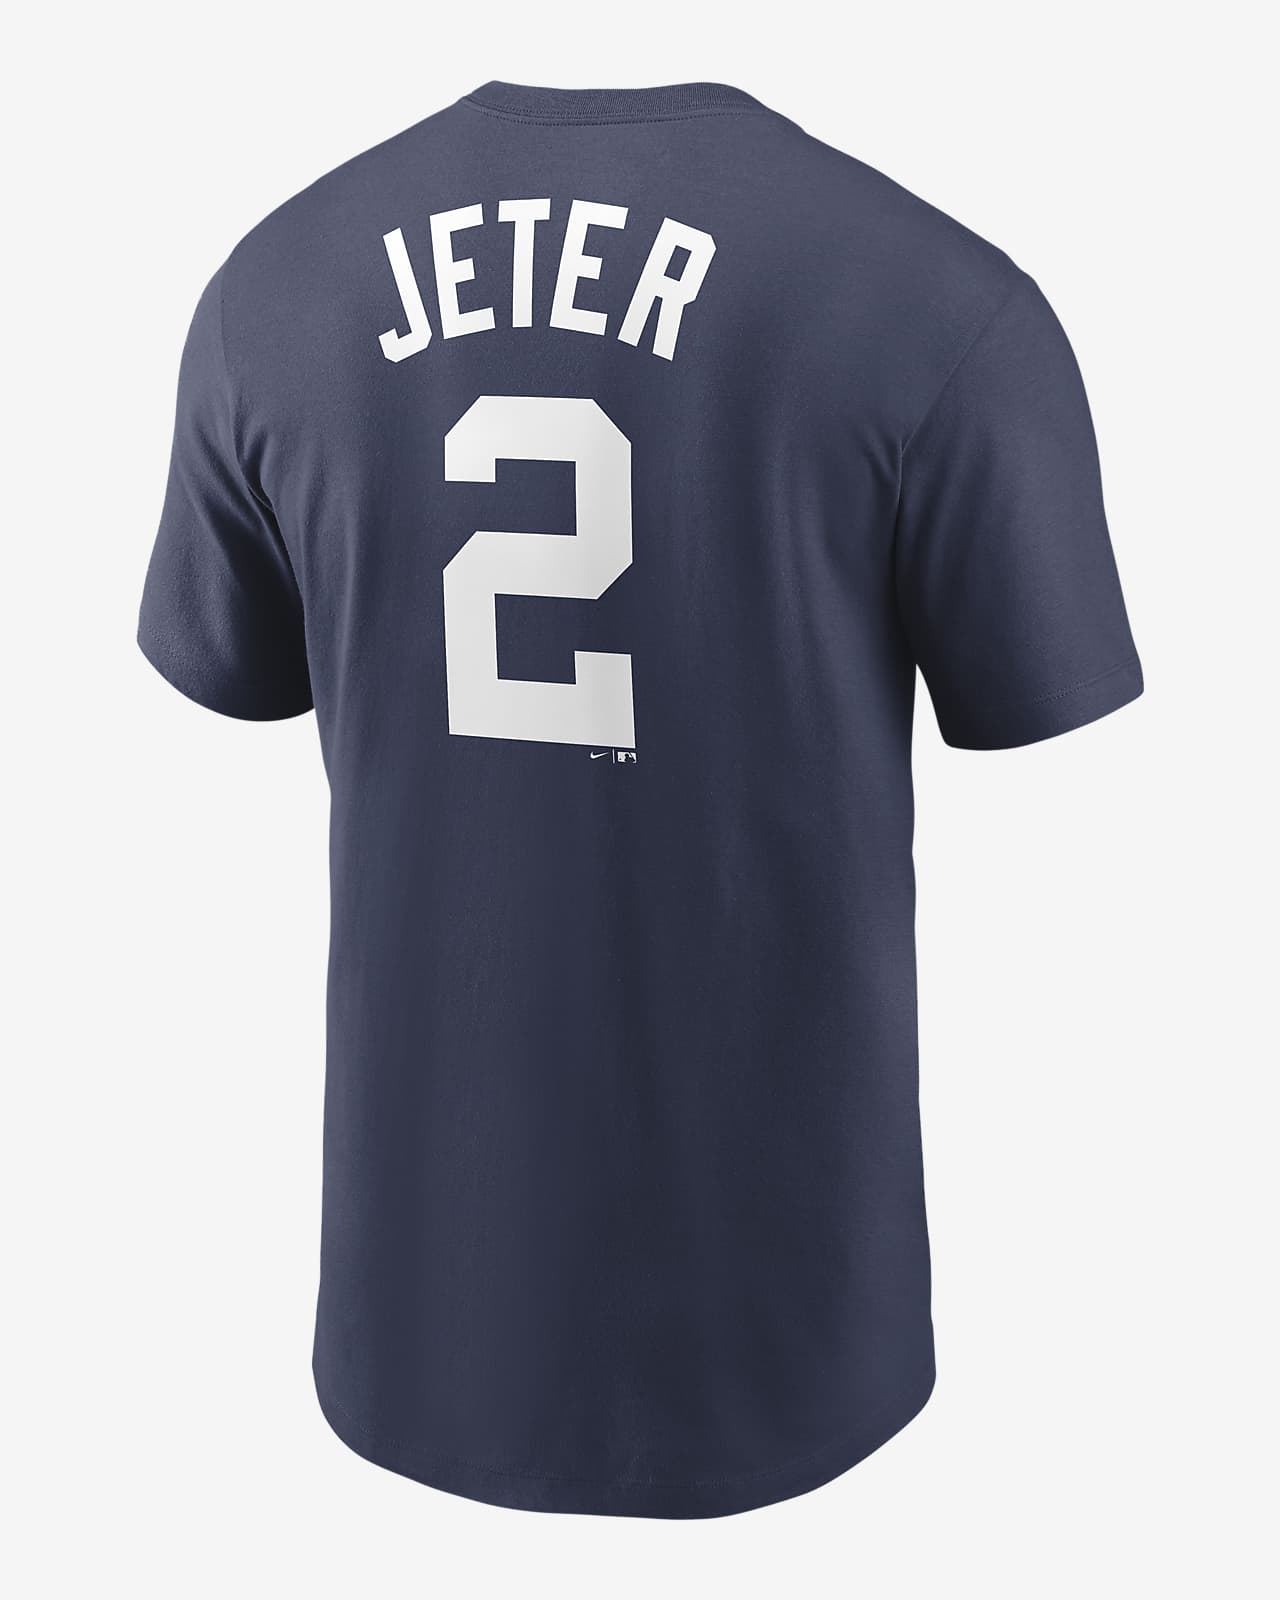 1999 Yankees Derek Jeter Jersey size 52 – Mr. Throwback NYC